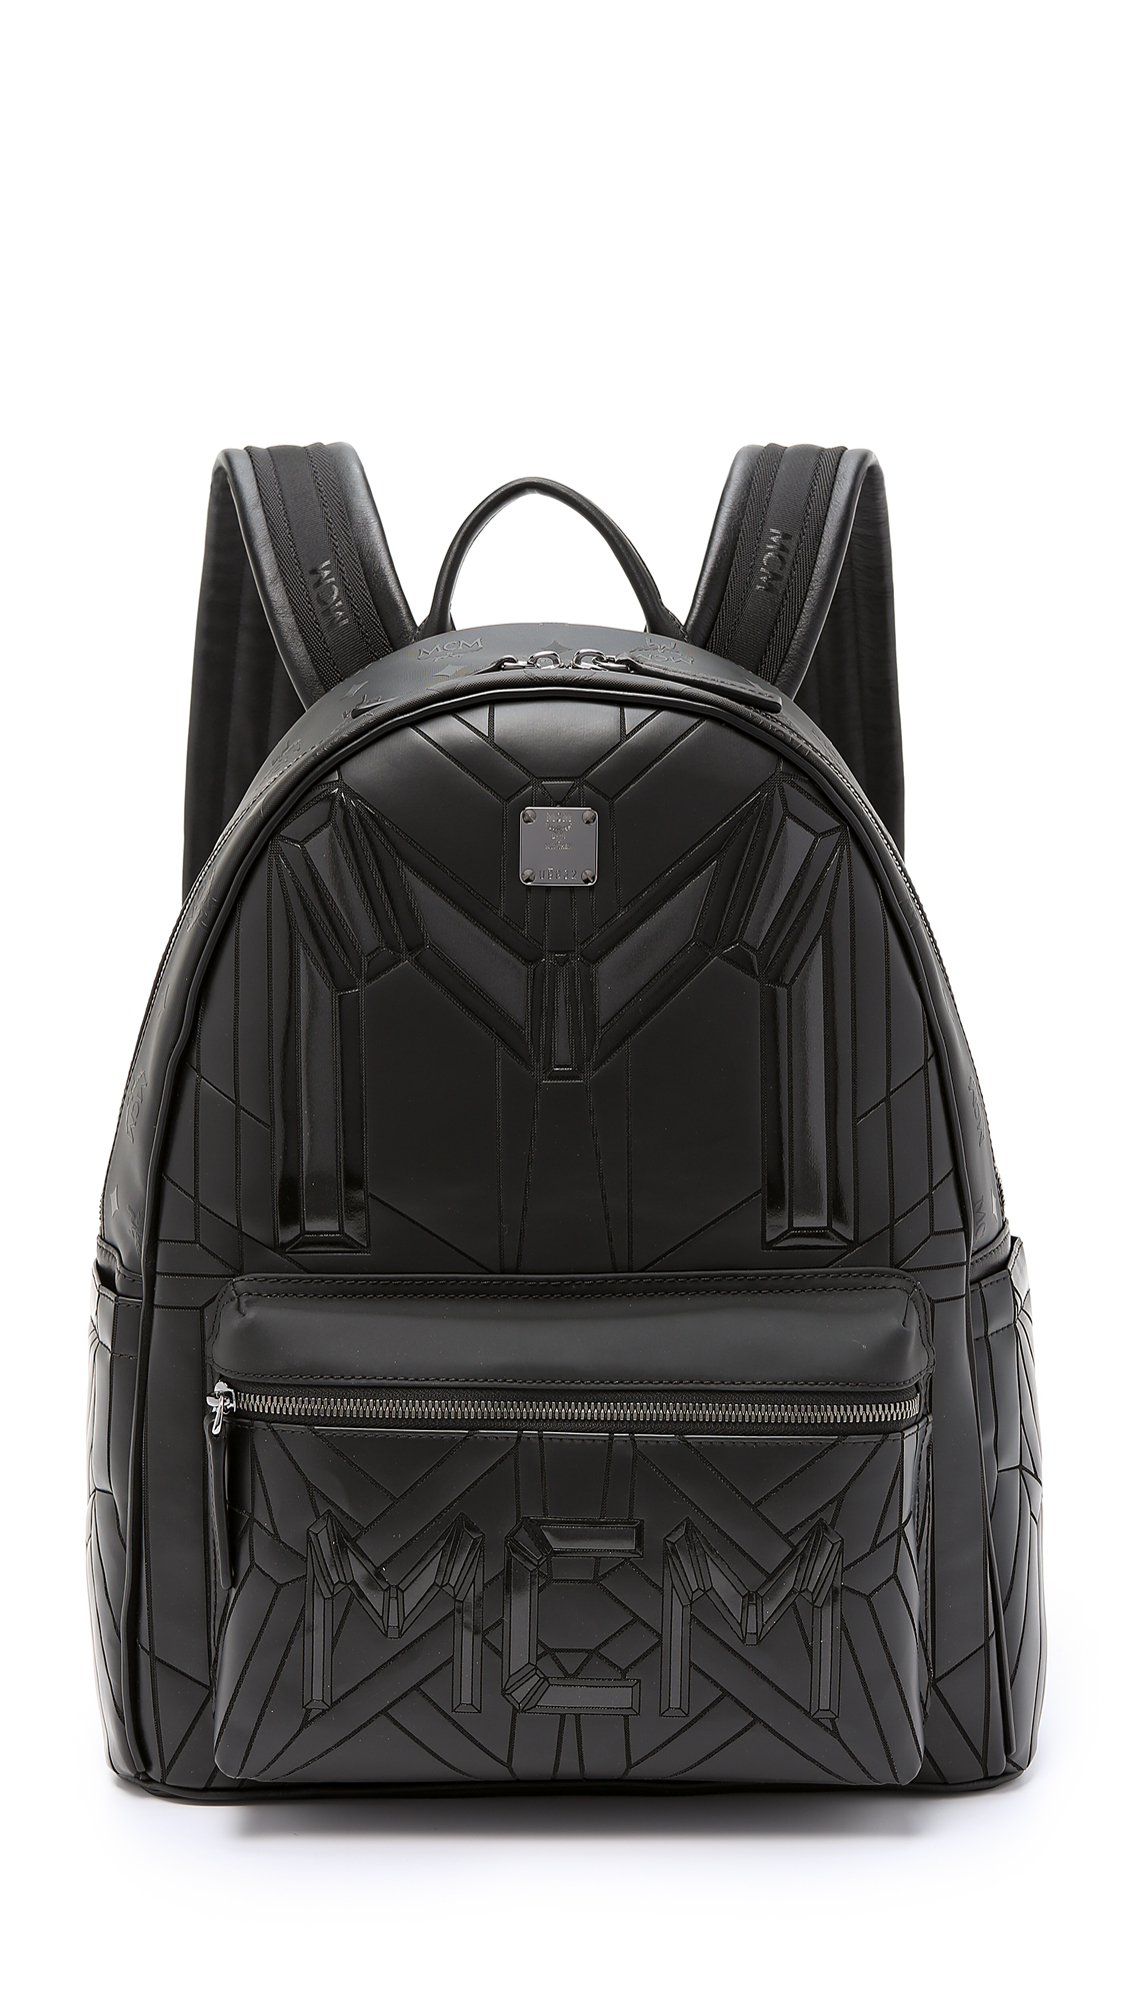 Lyst - Mcm Bionic Backpack in Black for Men